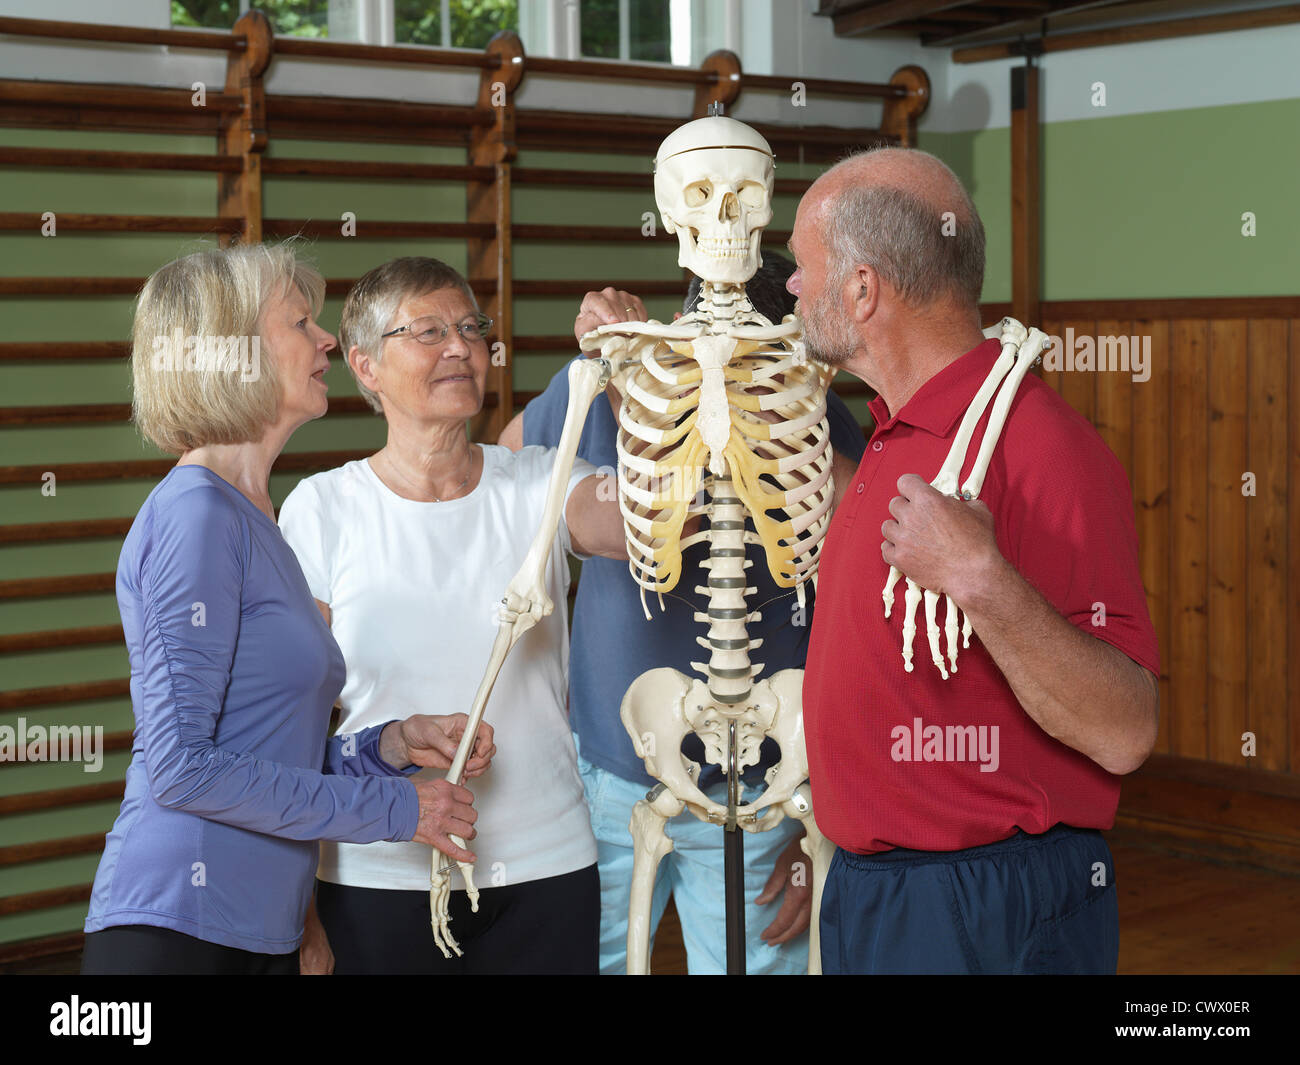 Older people examining skeleton Stock Photo